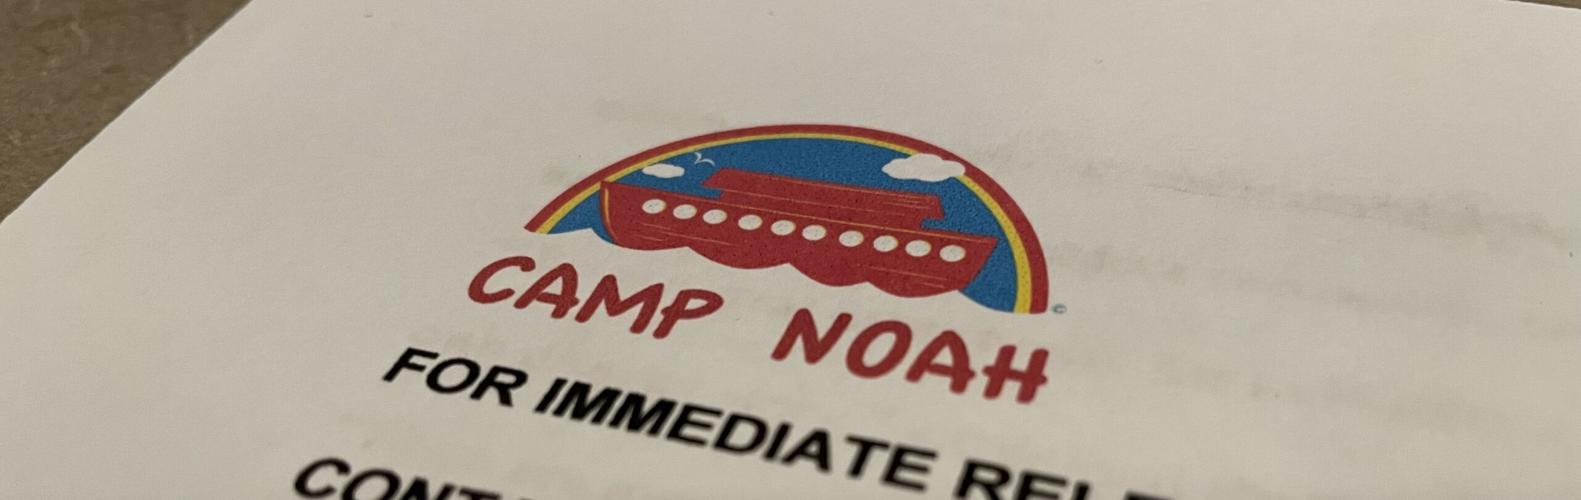 camp noah.jpg